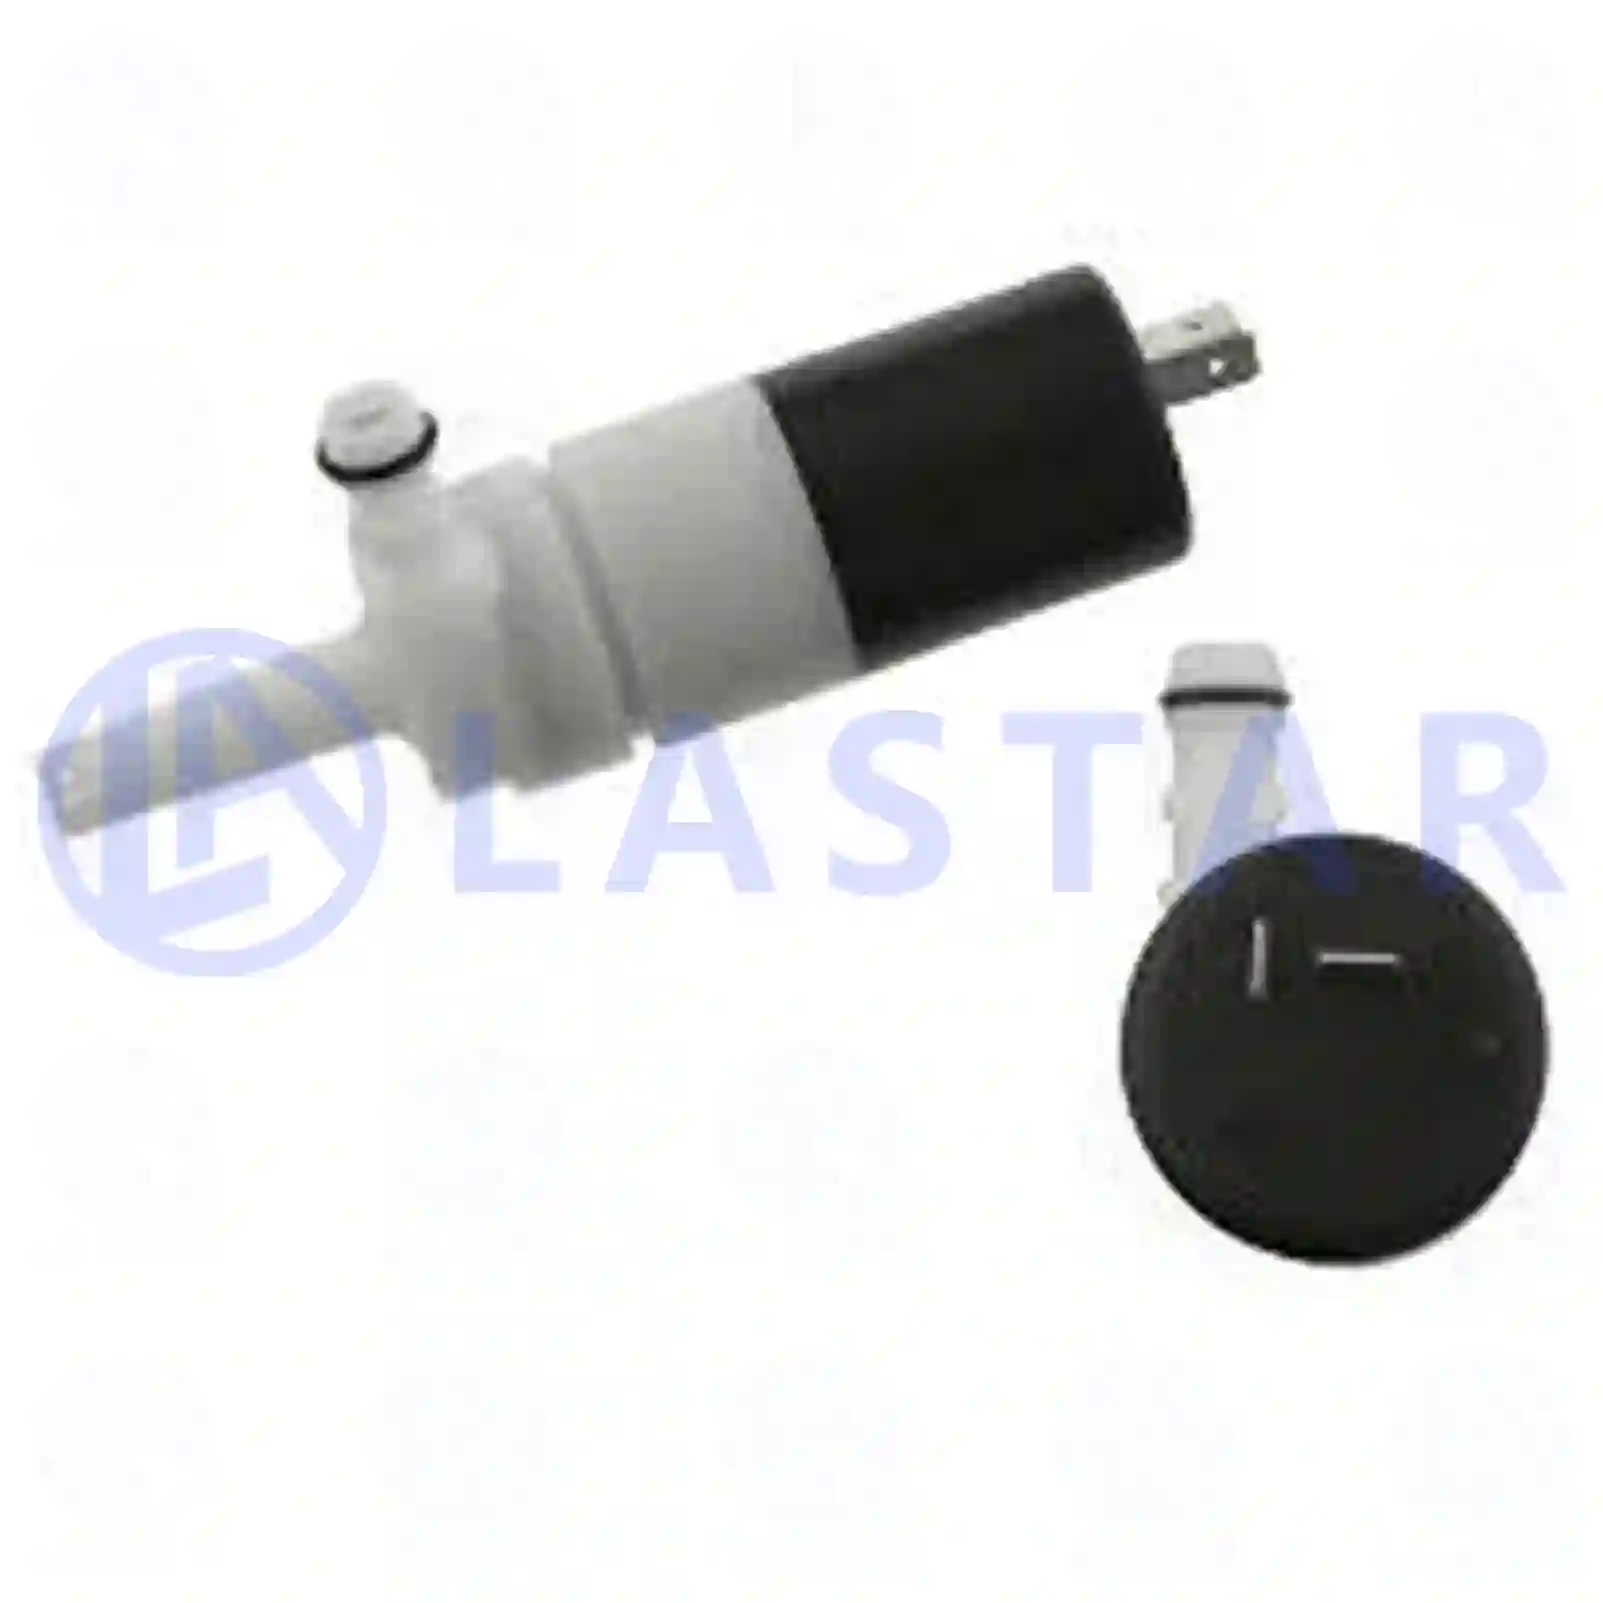  Washer pump, headlamp || Lastar Spare Part | Truck Spare Parts, Auotomotive Spare Parts